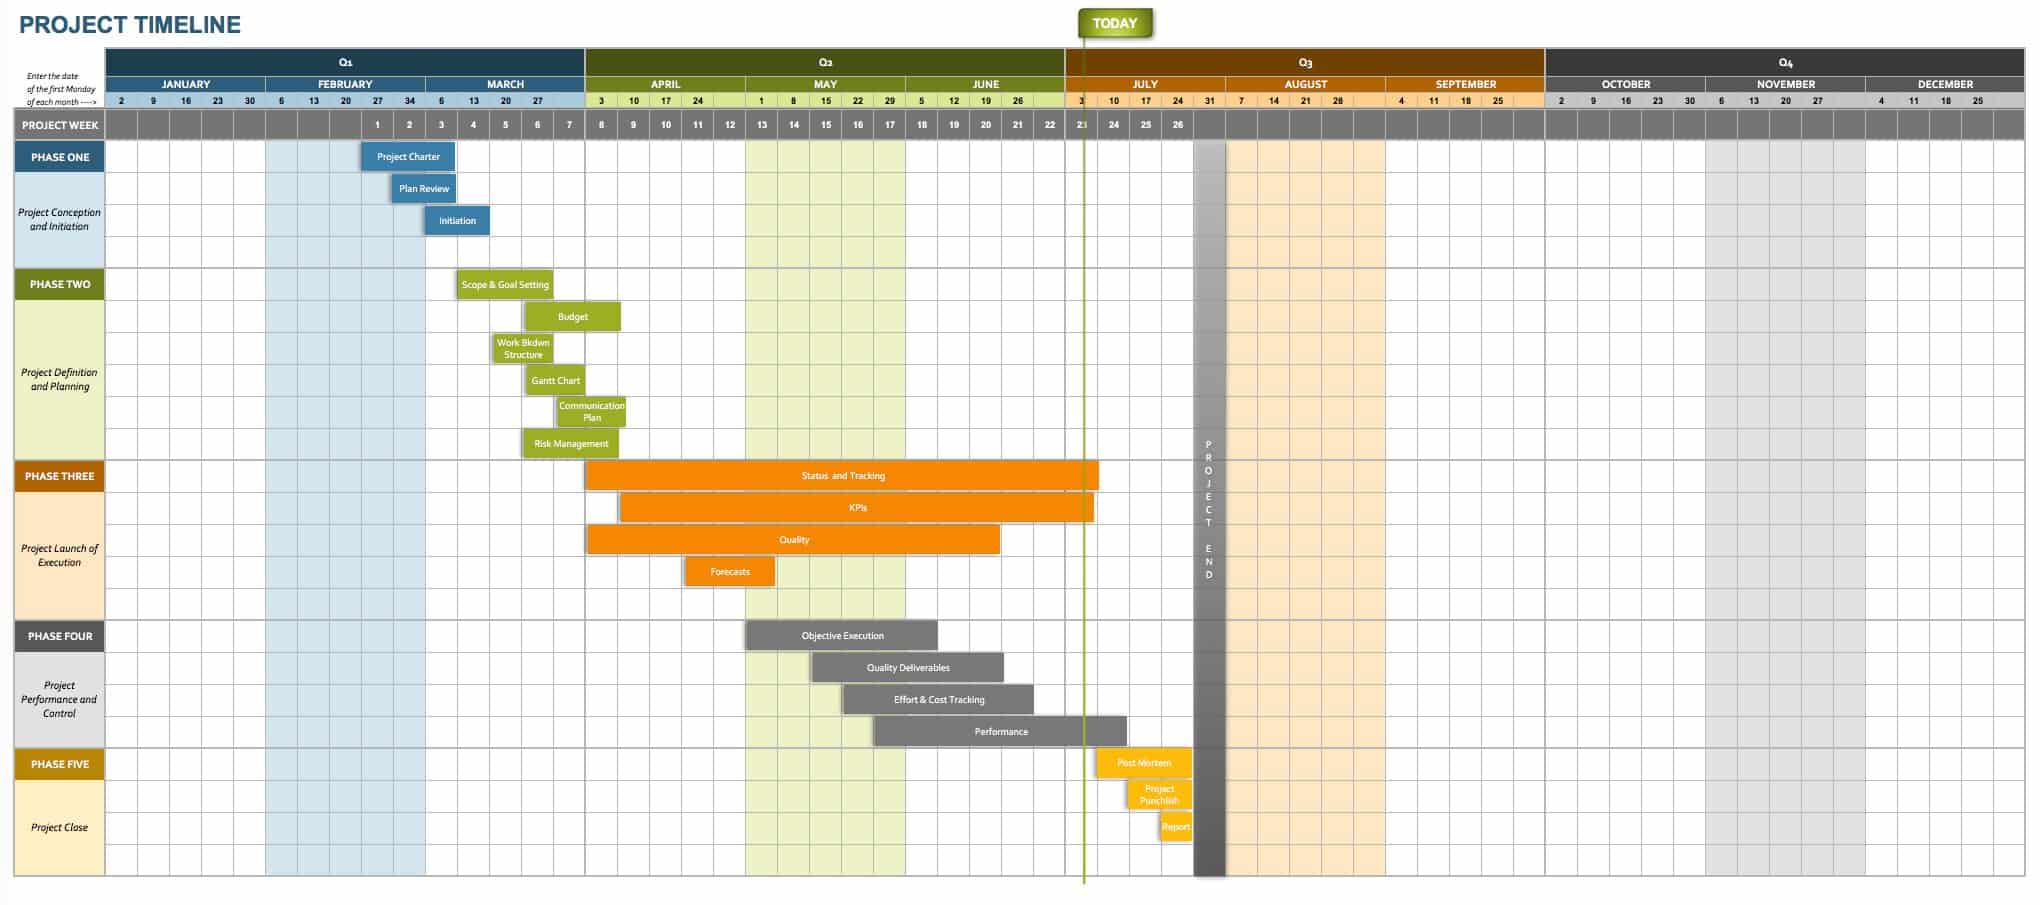 Project Schedule Template Excel from www.smartsheet.com